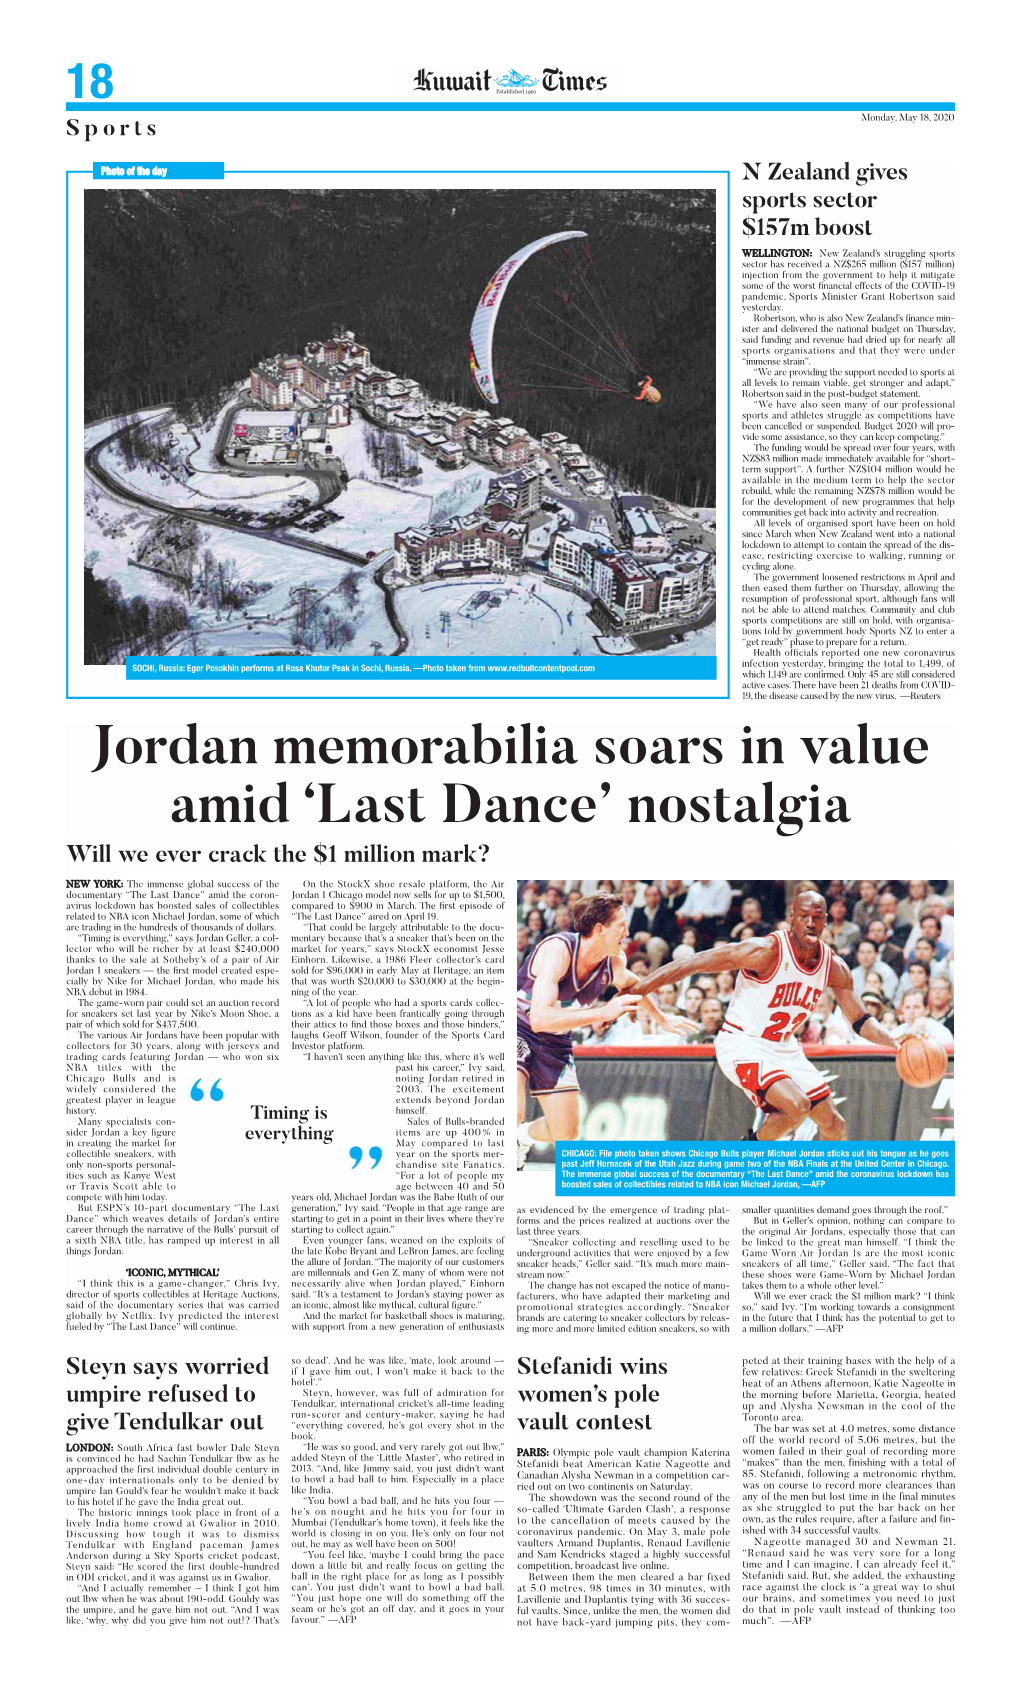 Jordan Memorabilia Soars in Value Amid 'Last Dance'